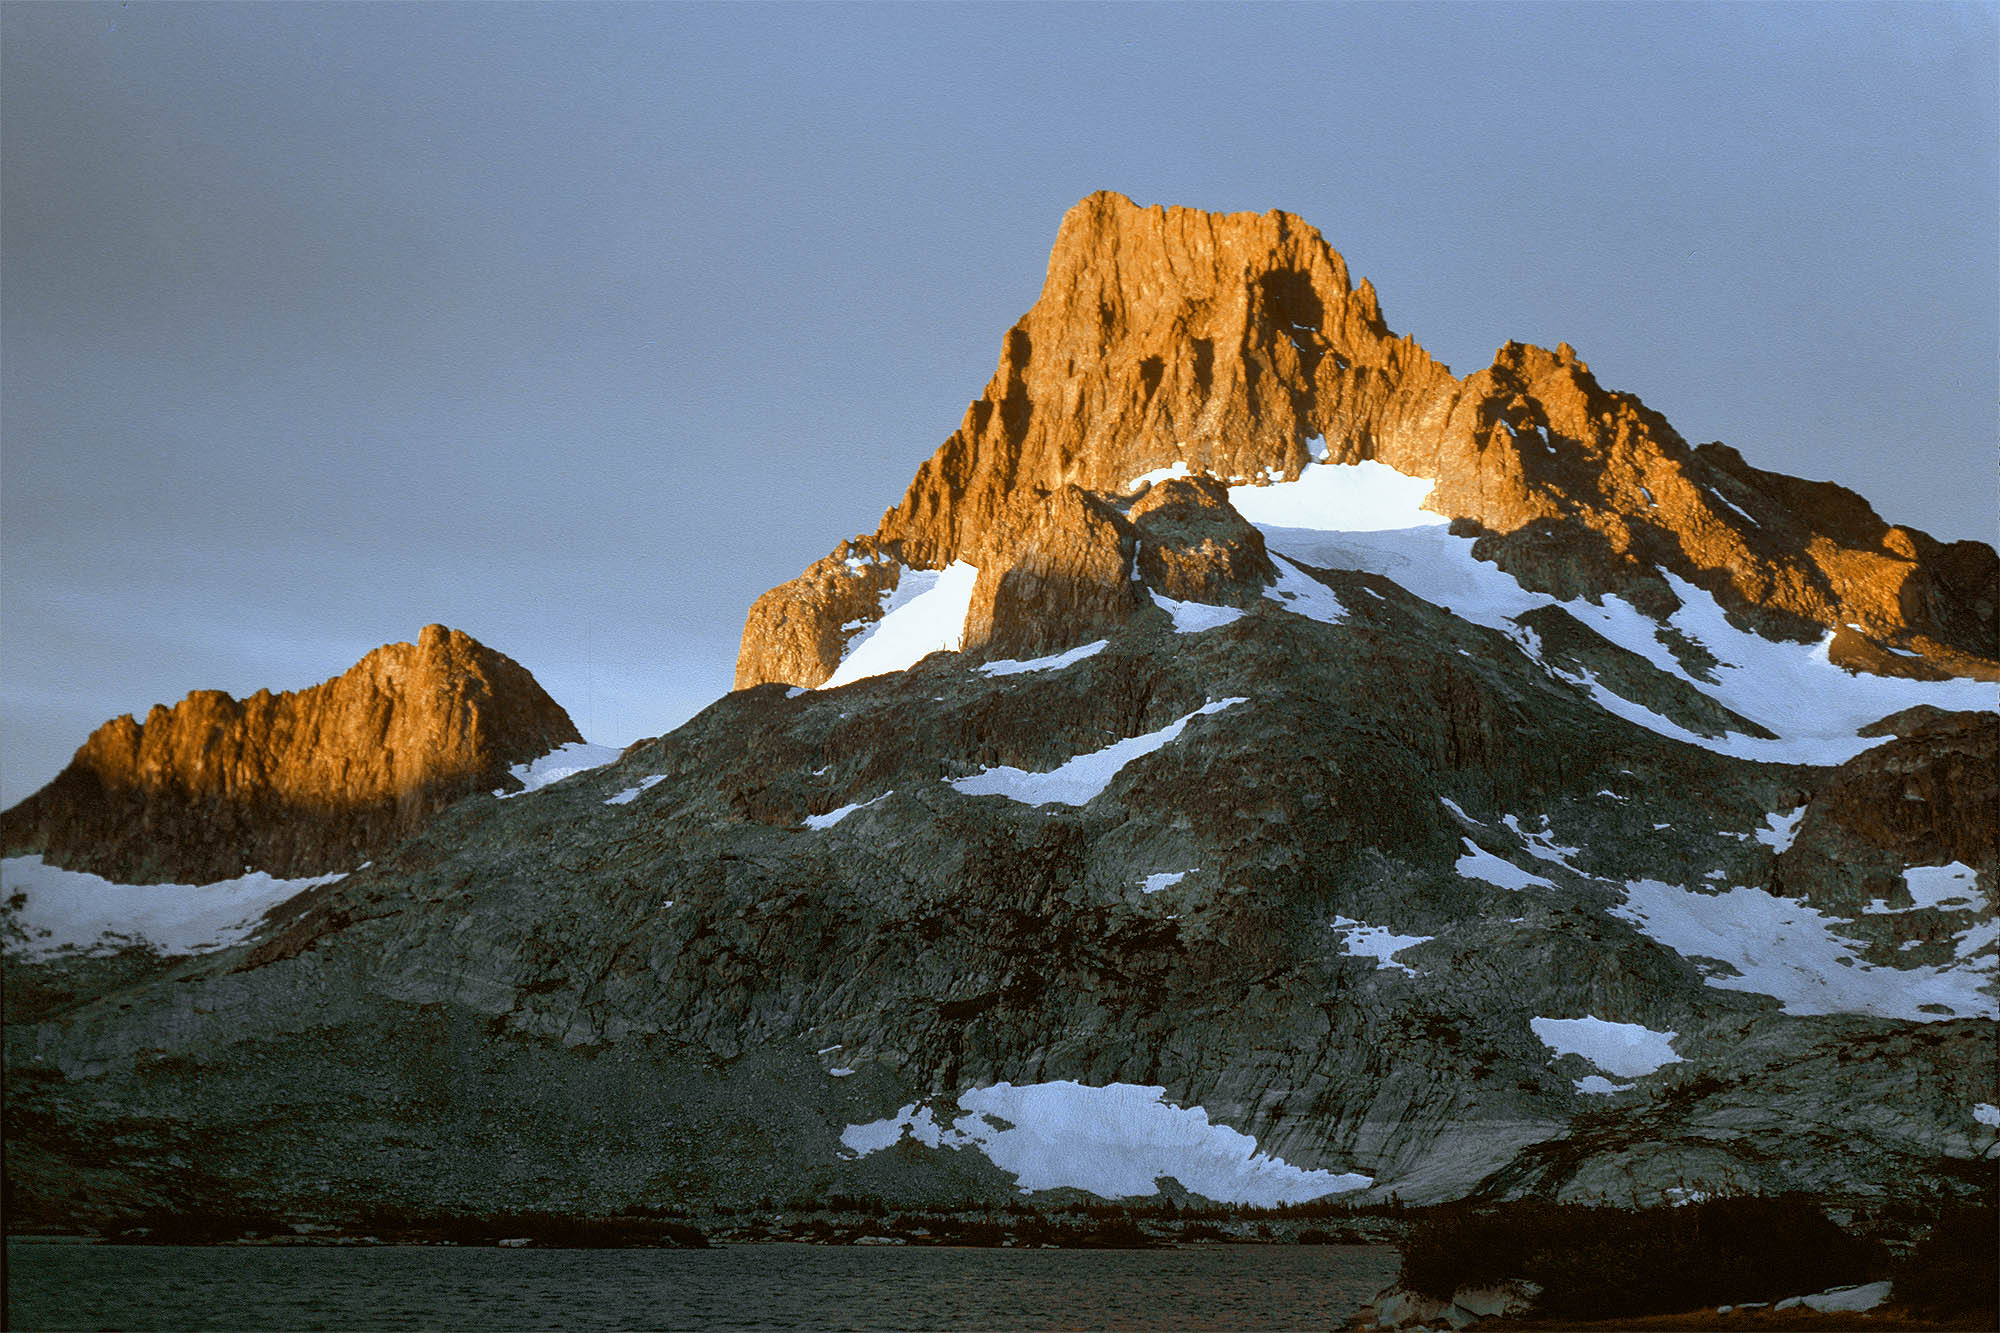 bill-hocker-banner-peak-thousand-island-lake-high-sierra-california-1979